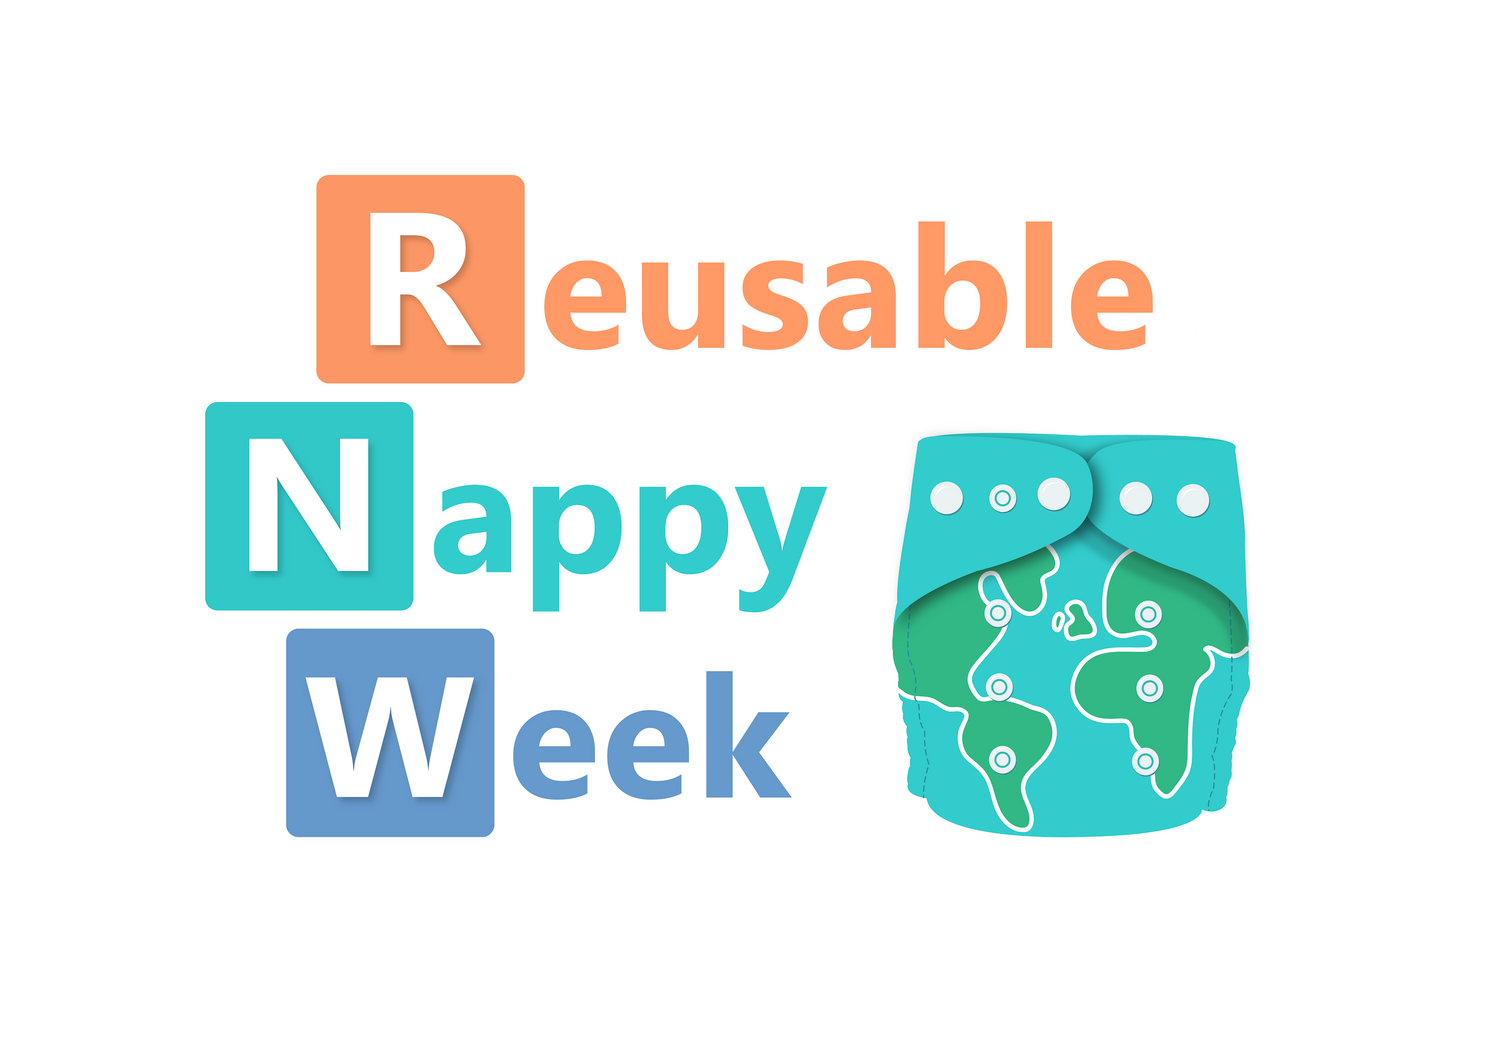 Choose to reuse: Reusable nappy week 2024, maandag 22 t/m zondag 28 april 2024